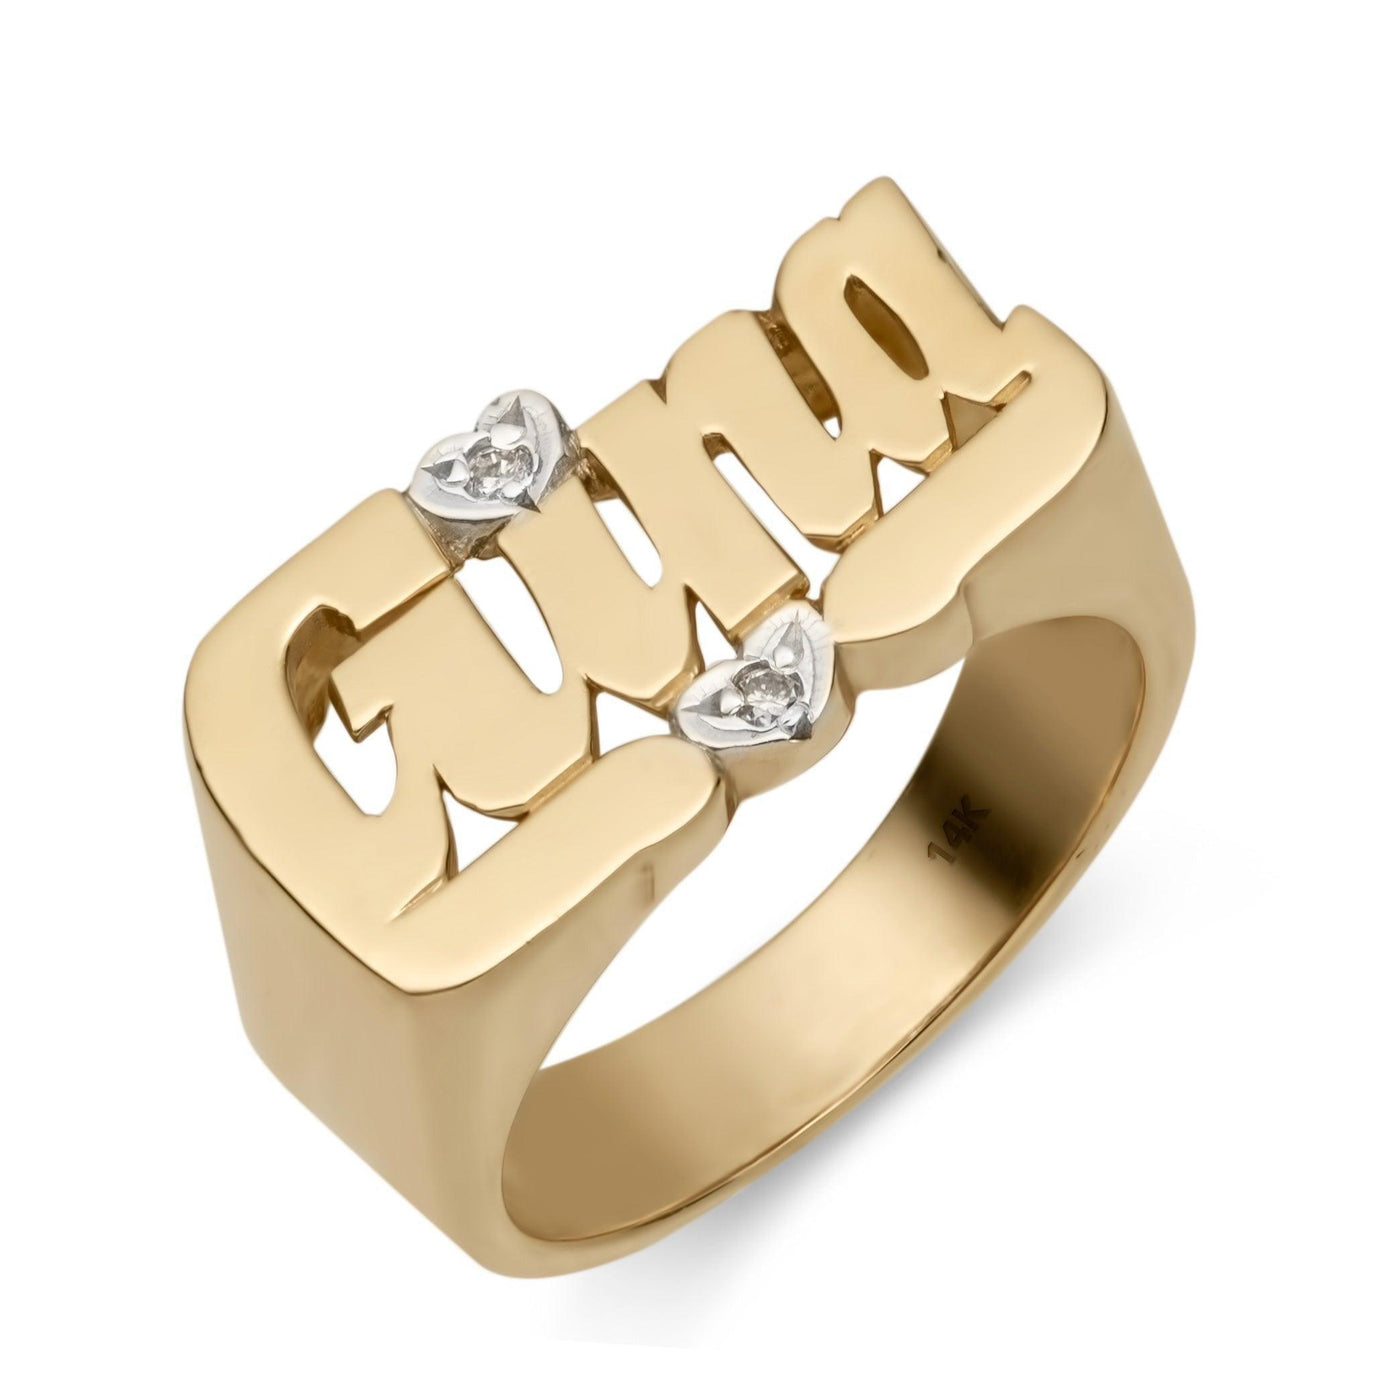 Name Ring with Diamond Hearts 14K Gold - Style 11 - bayamjewelry